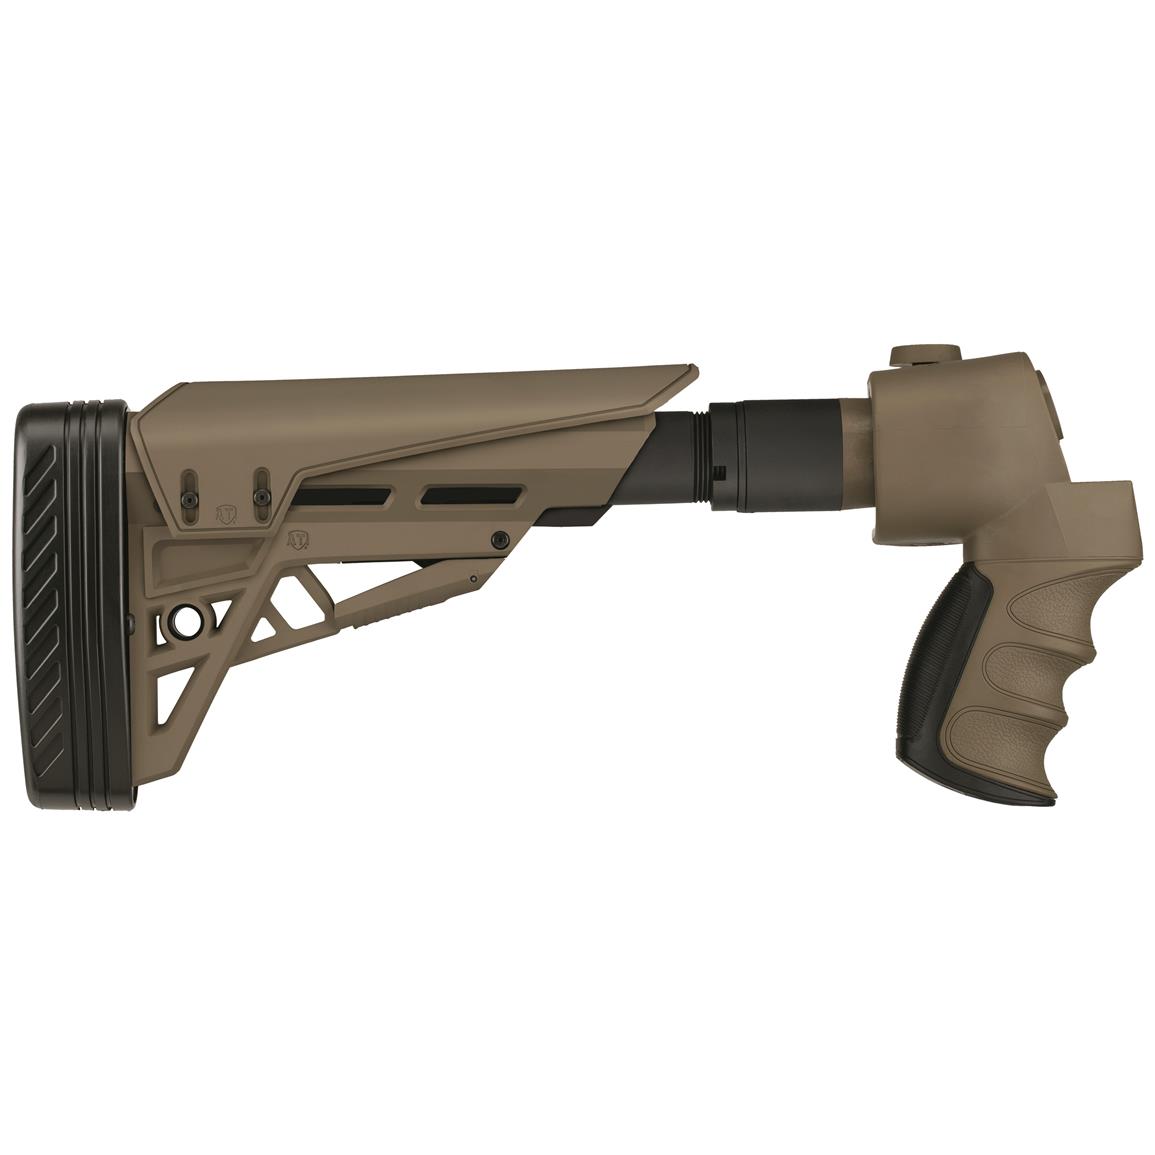 Mossberg Ati Side Folding Tactical Shotgun Stock Gunauction My